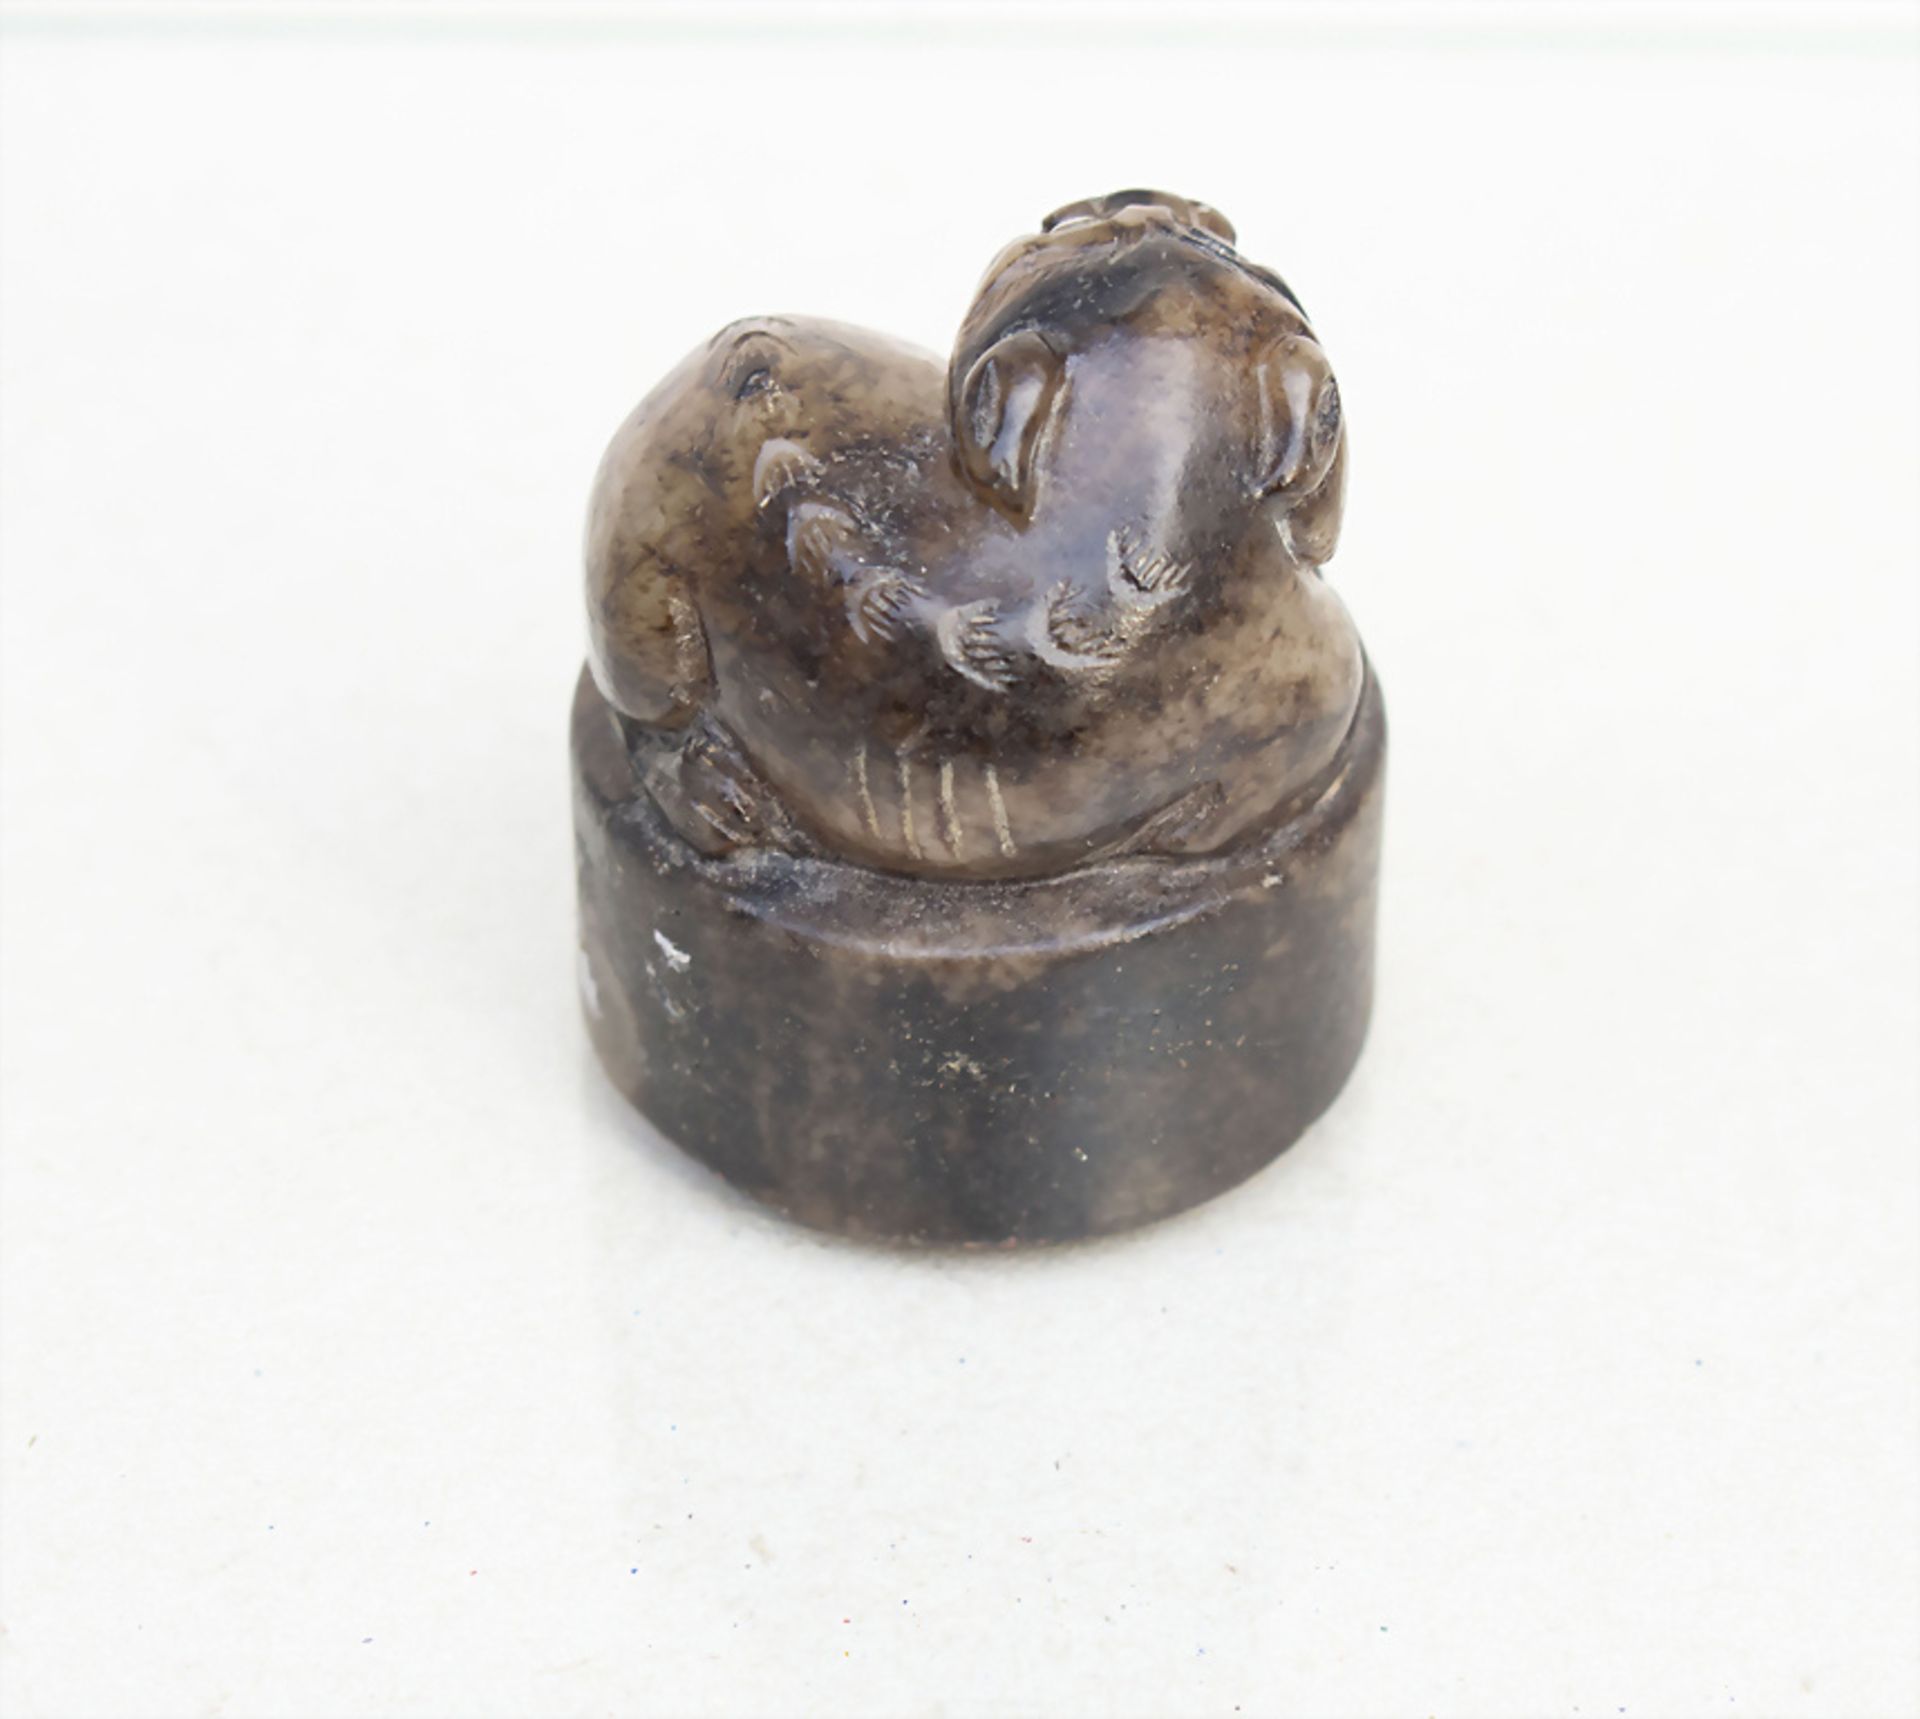 Jadesiegel 'Löwe' / A jade seal 'Lion', China, Qing-Zeit, 19.-20. Jh. - Image 3 of 6